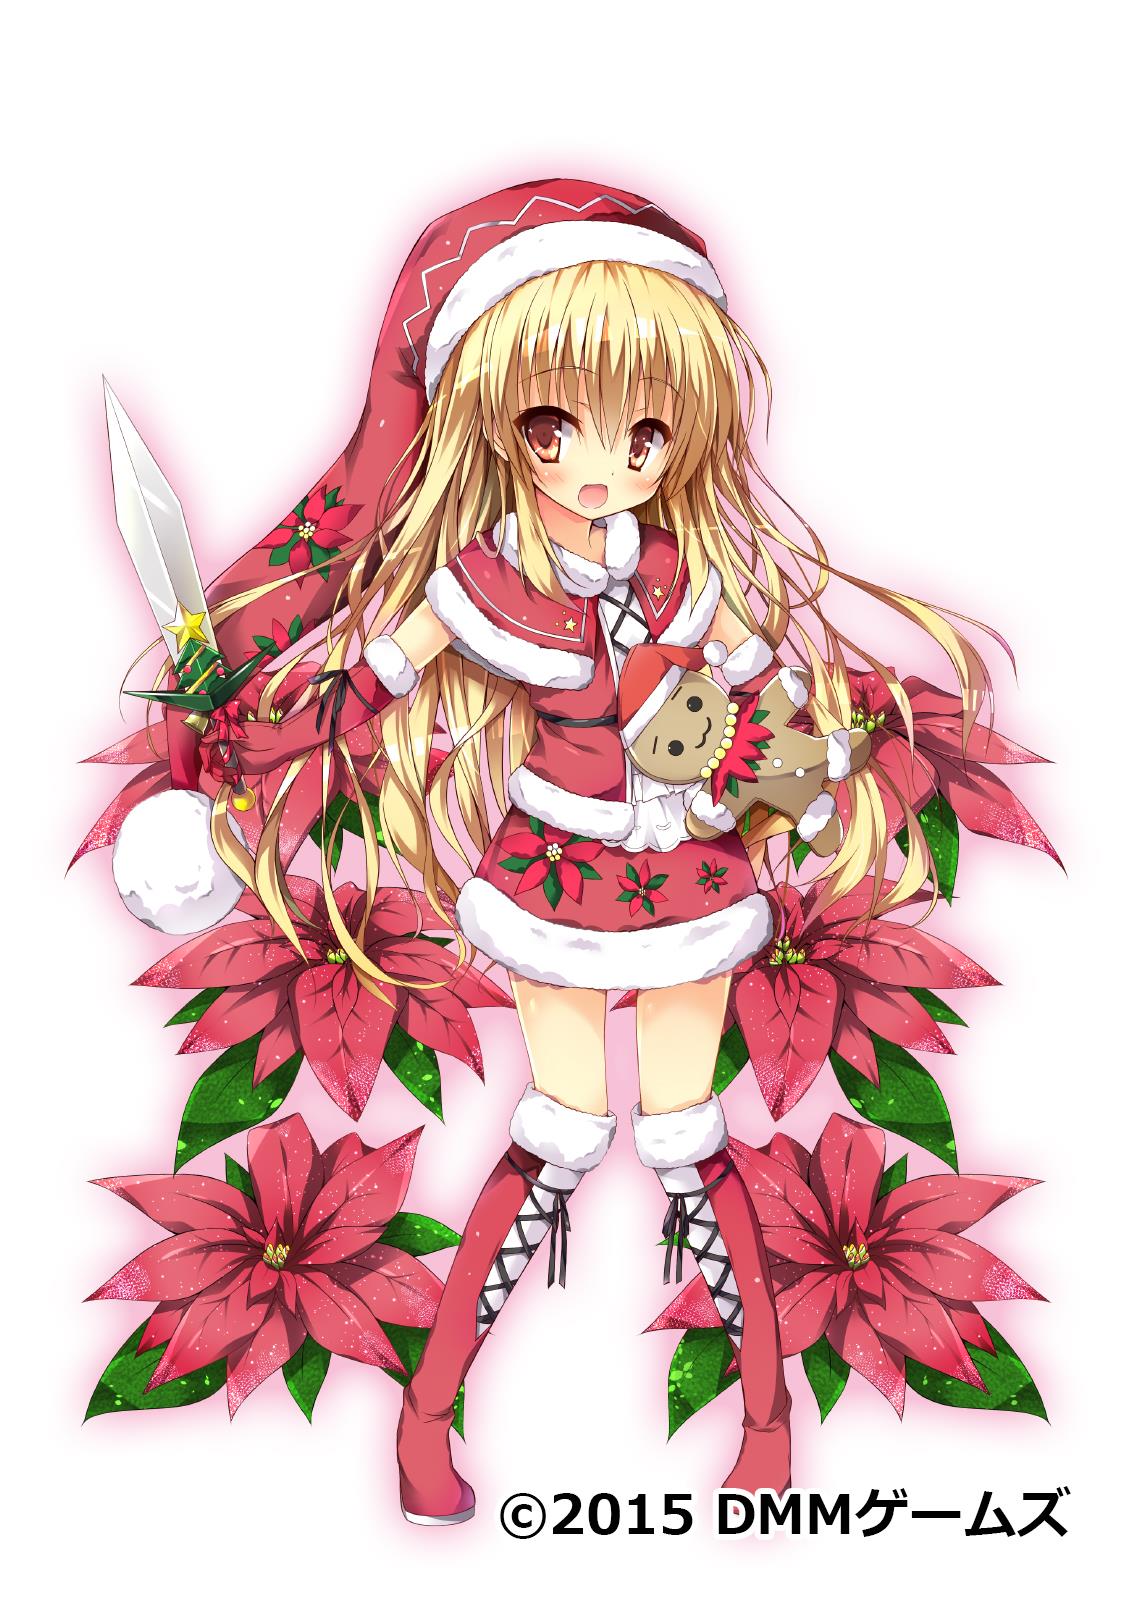 Flower Knight Girl 冬季限定イベント クリスマス フェスタ 開催や新キャラクター クリスマスローズ モミノキ ポインセチア 追加を含むアップデートを本日実施 ネトゲブックマーク